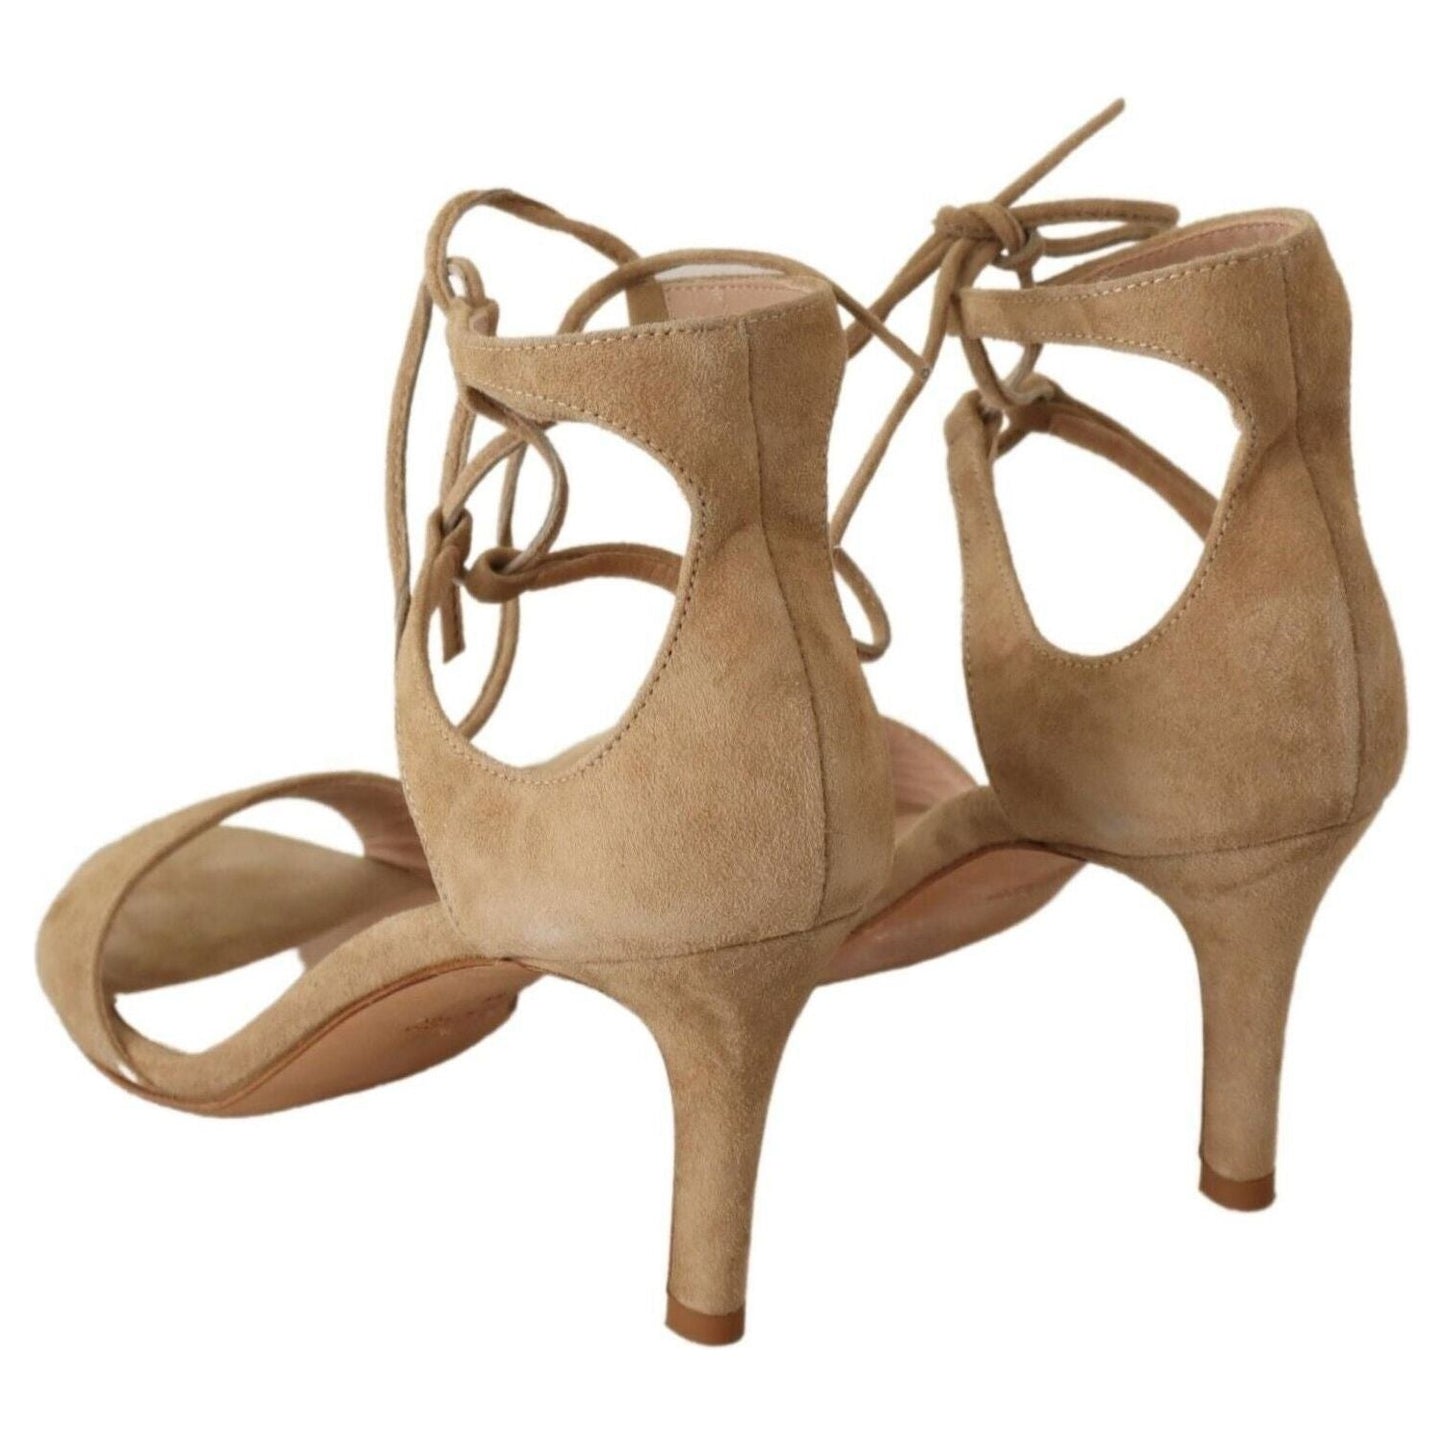 Maria Christina Elegant Beige Suede Ankle Strap Heels WOMAN PUMPS beige-suede-leather-ankle-strap-pumps-shoes